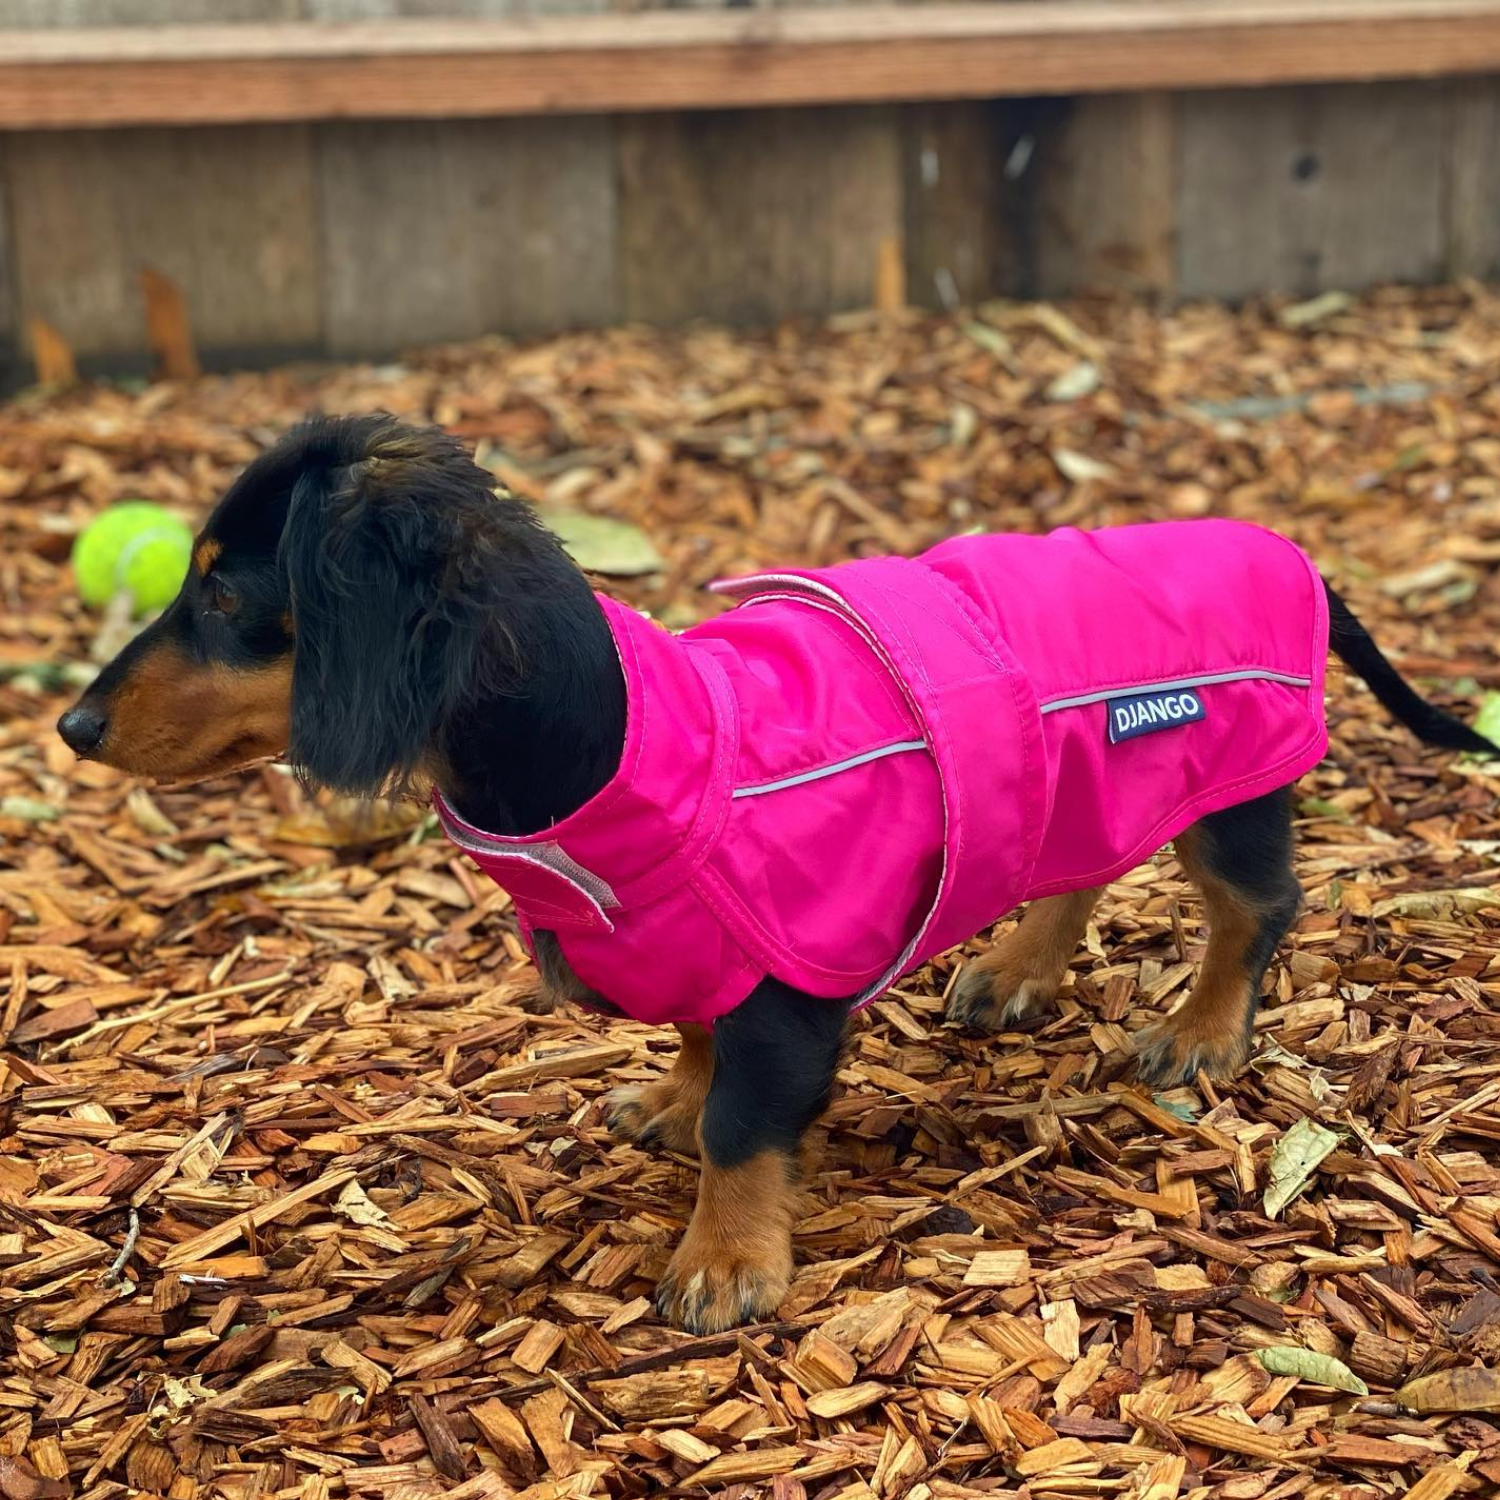 DJANGO City Slicker All-Weather Water-Repellent and Windproof Dog Jacket, Dog Raincoat and Dog Winter Coat in Cerise Pink - djangobrand.com